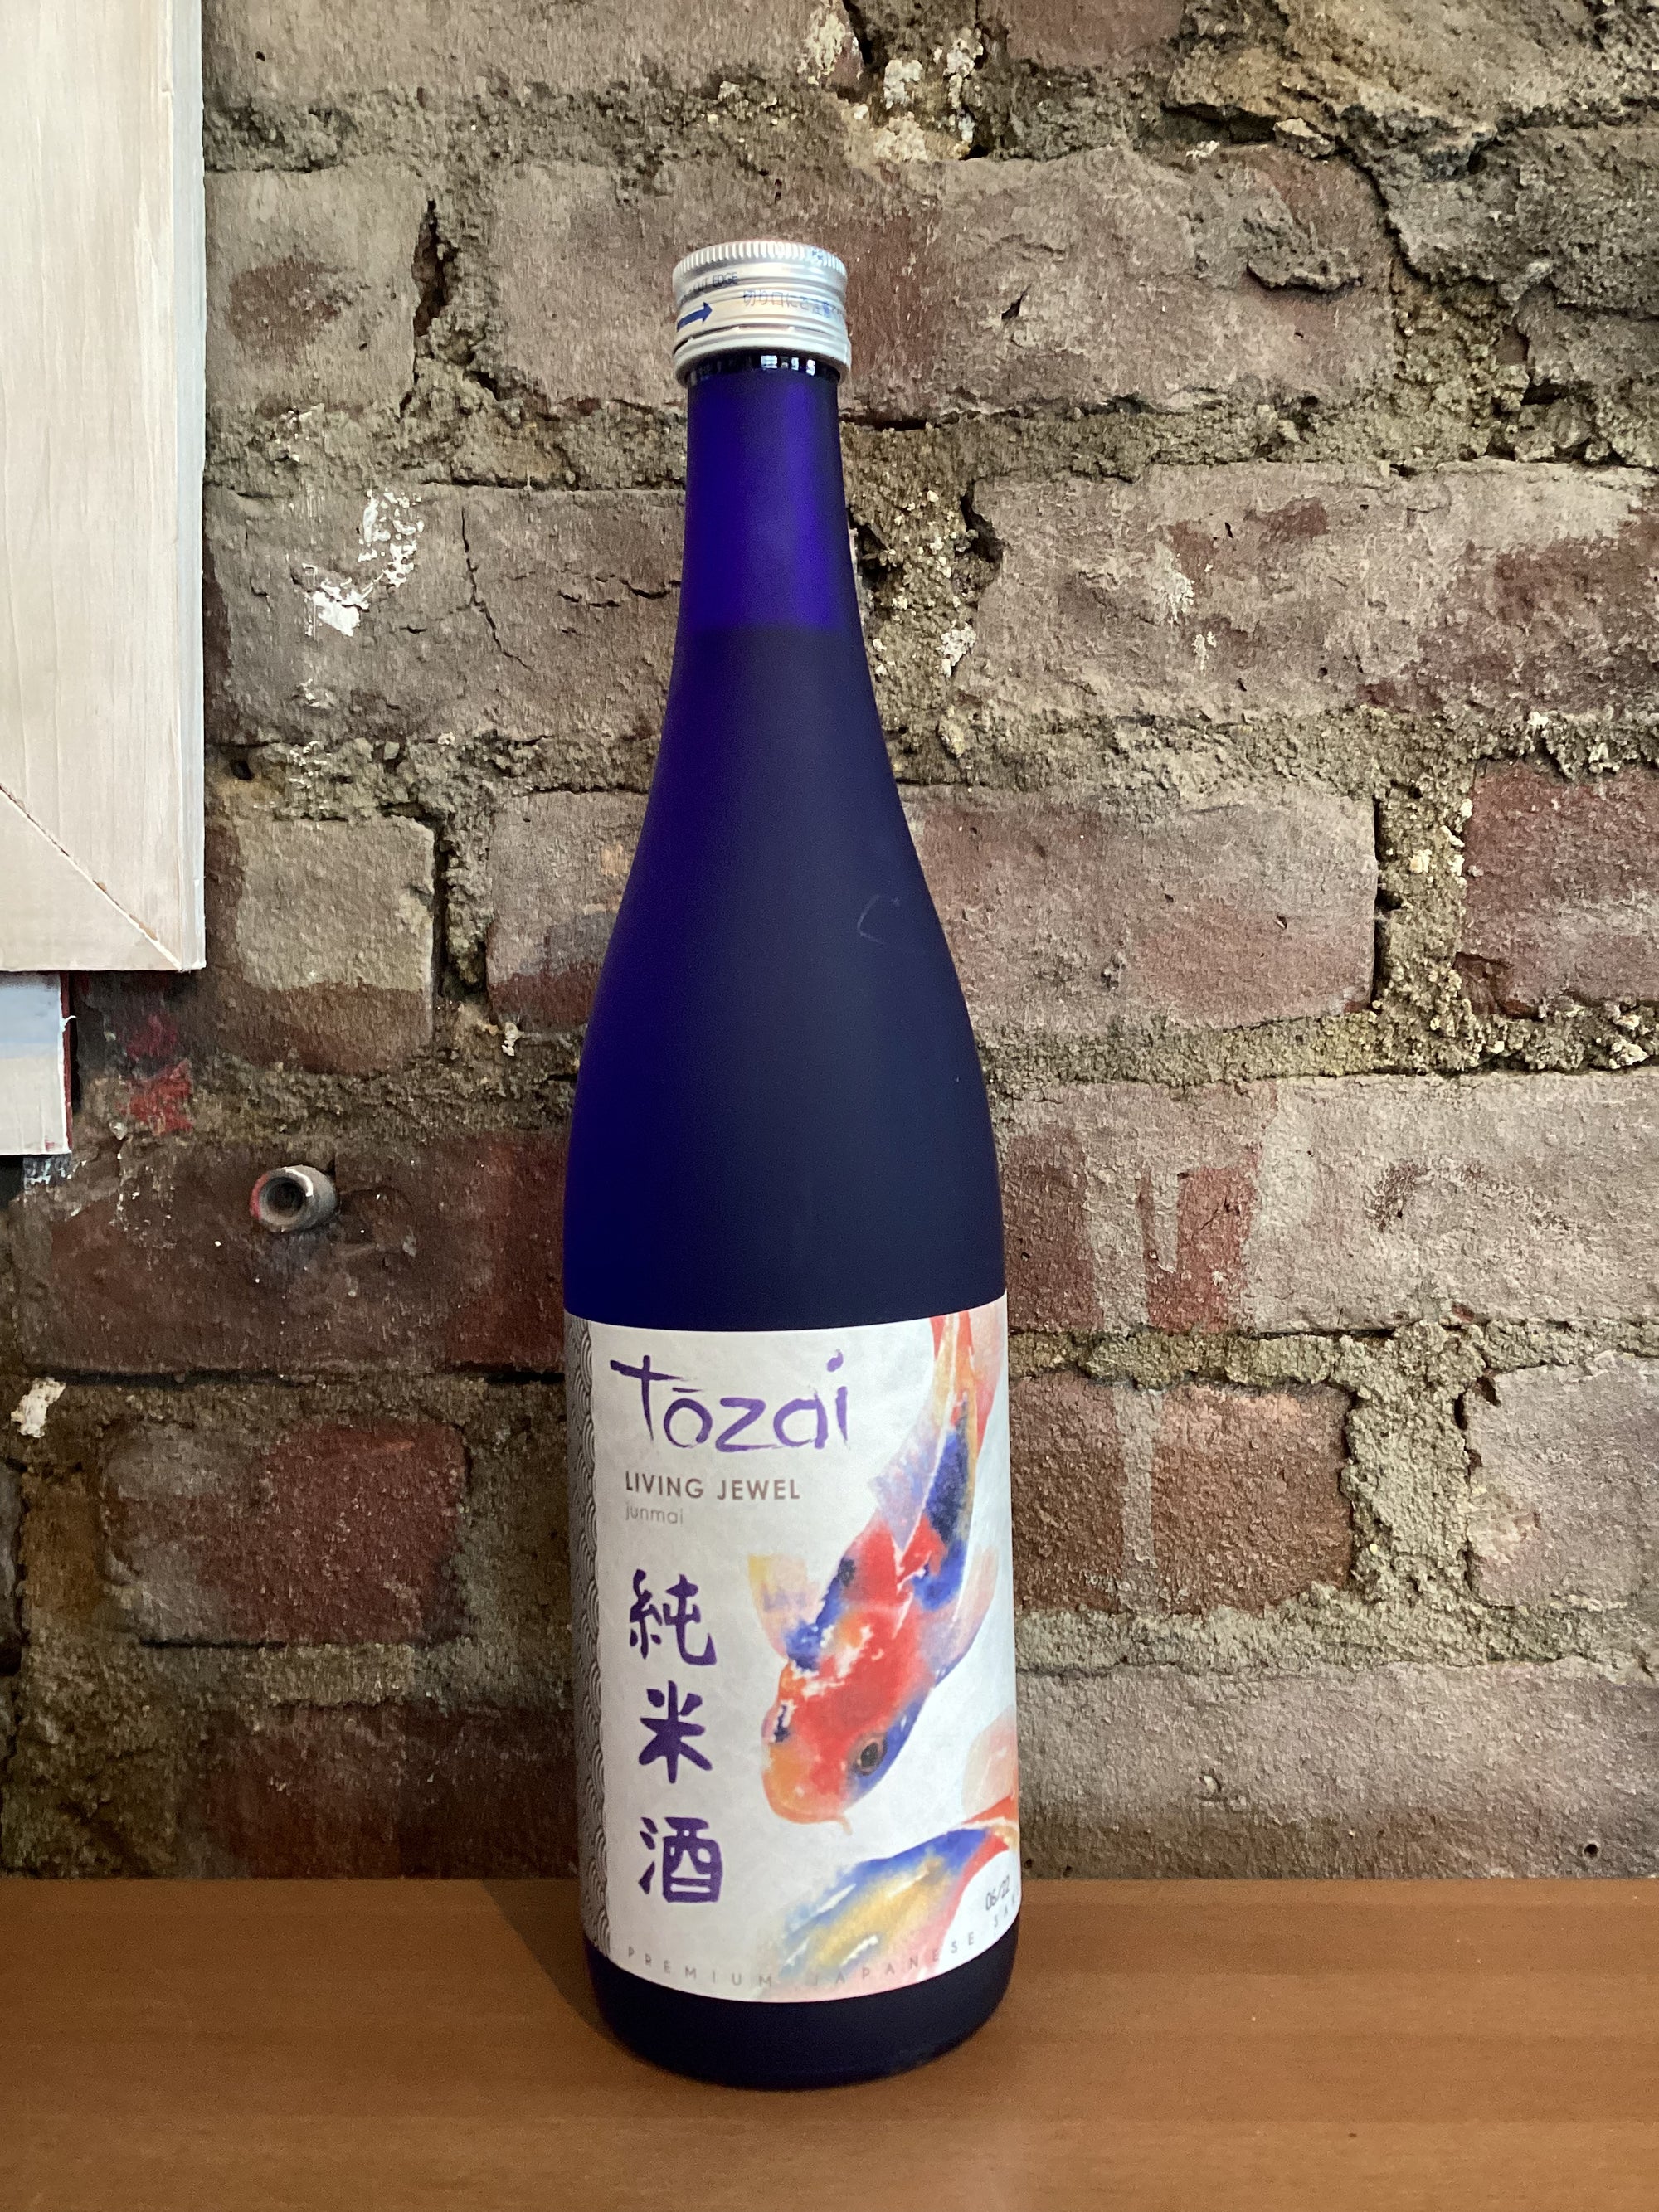 Tozai, "Living Jewel" Junmai Sake (Kyoto, Japan) 720ml